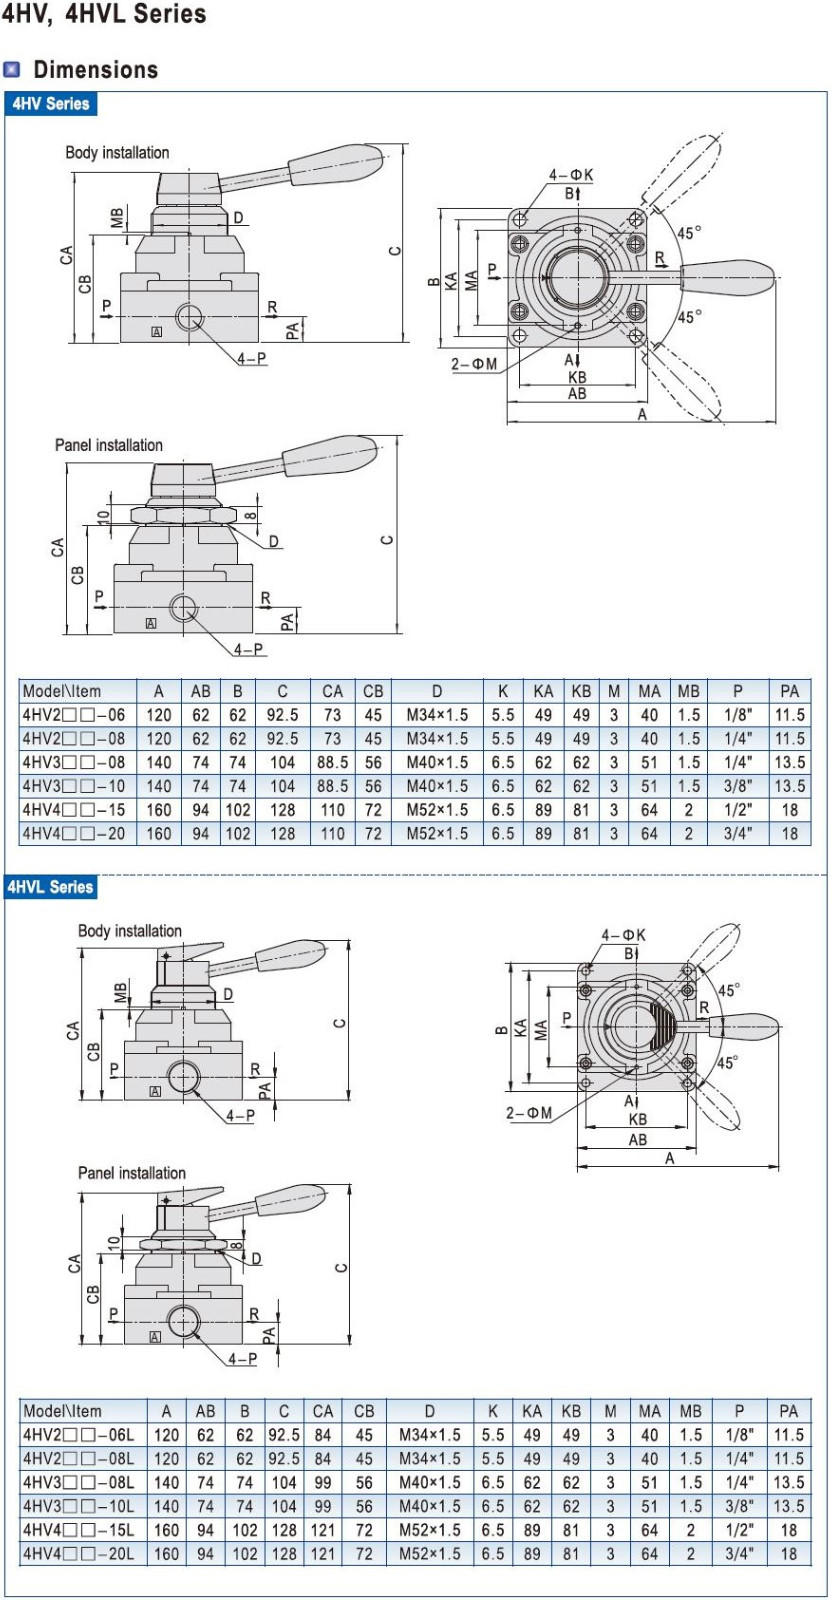 custom pneumatic manual control valve cheapest price at discount AIRWOLF